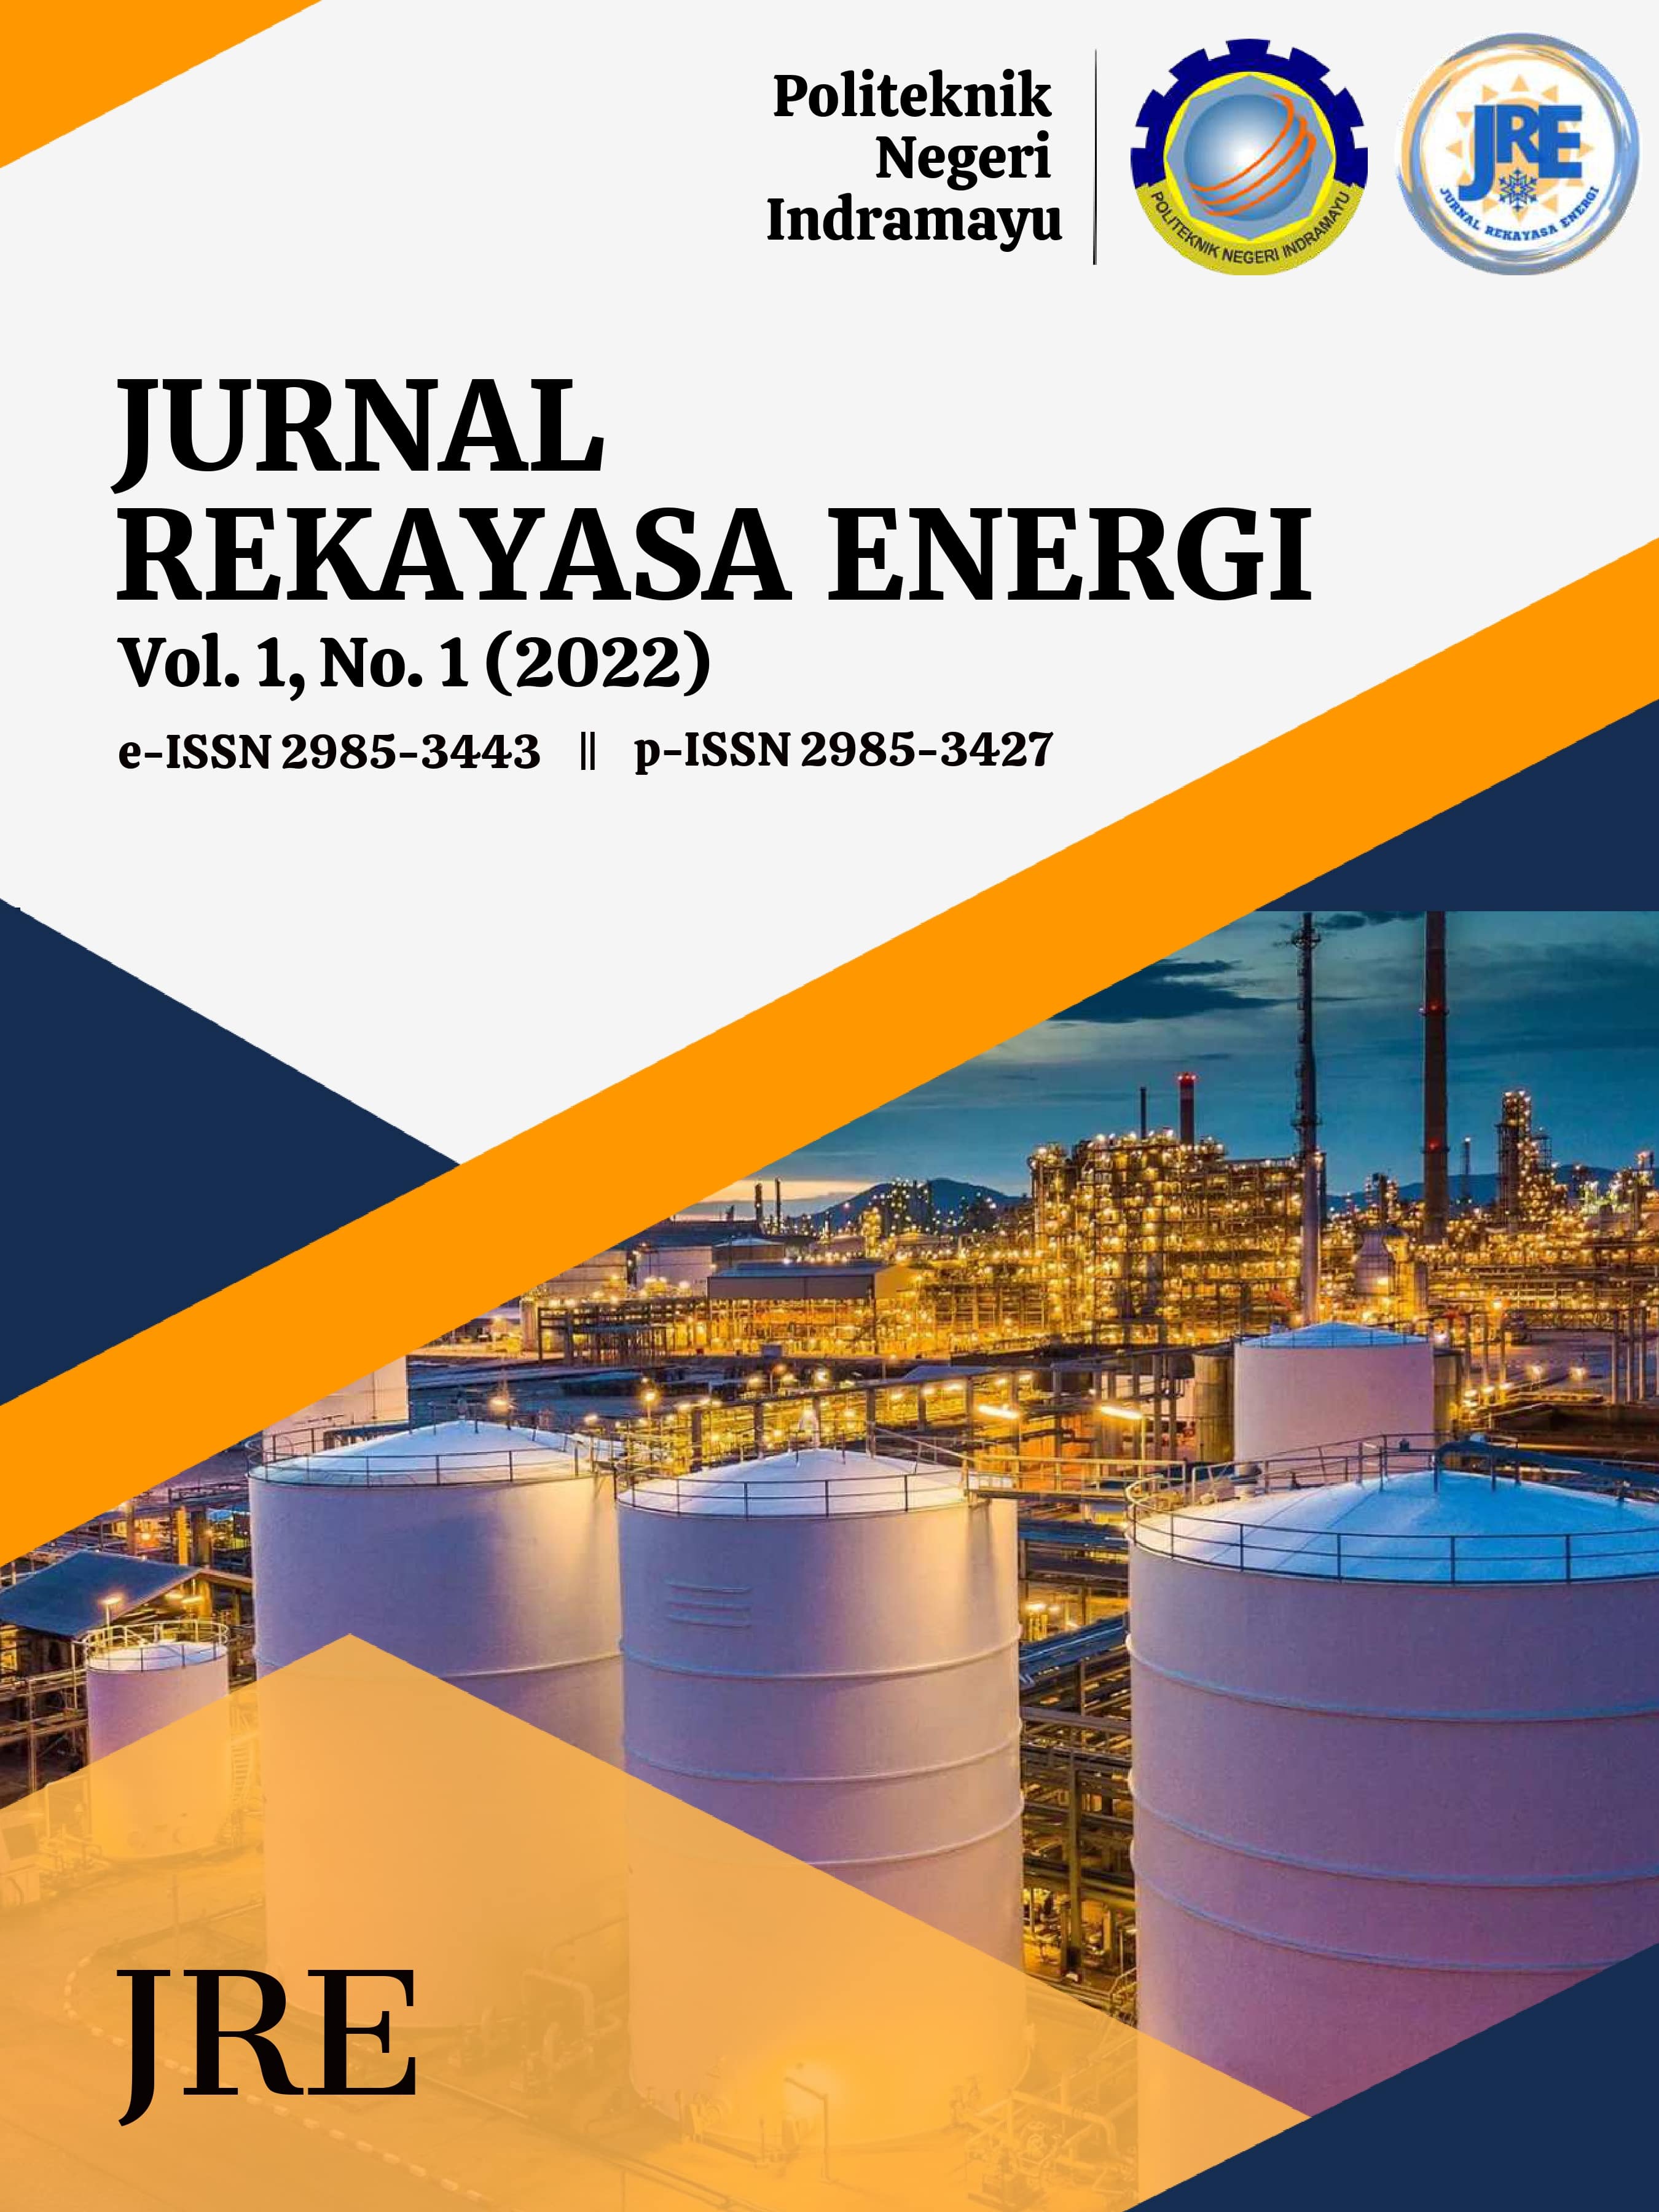 					View Vol. 1 No. 1 (2022): Jurnal Rekayasa Energi (JRE)
				